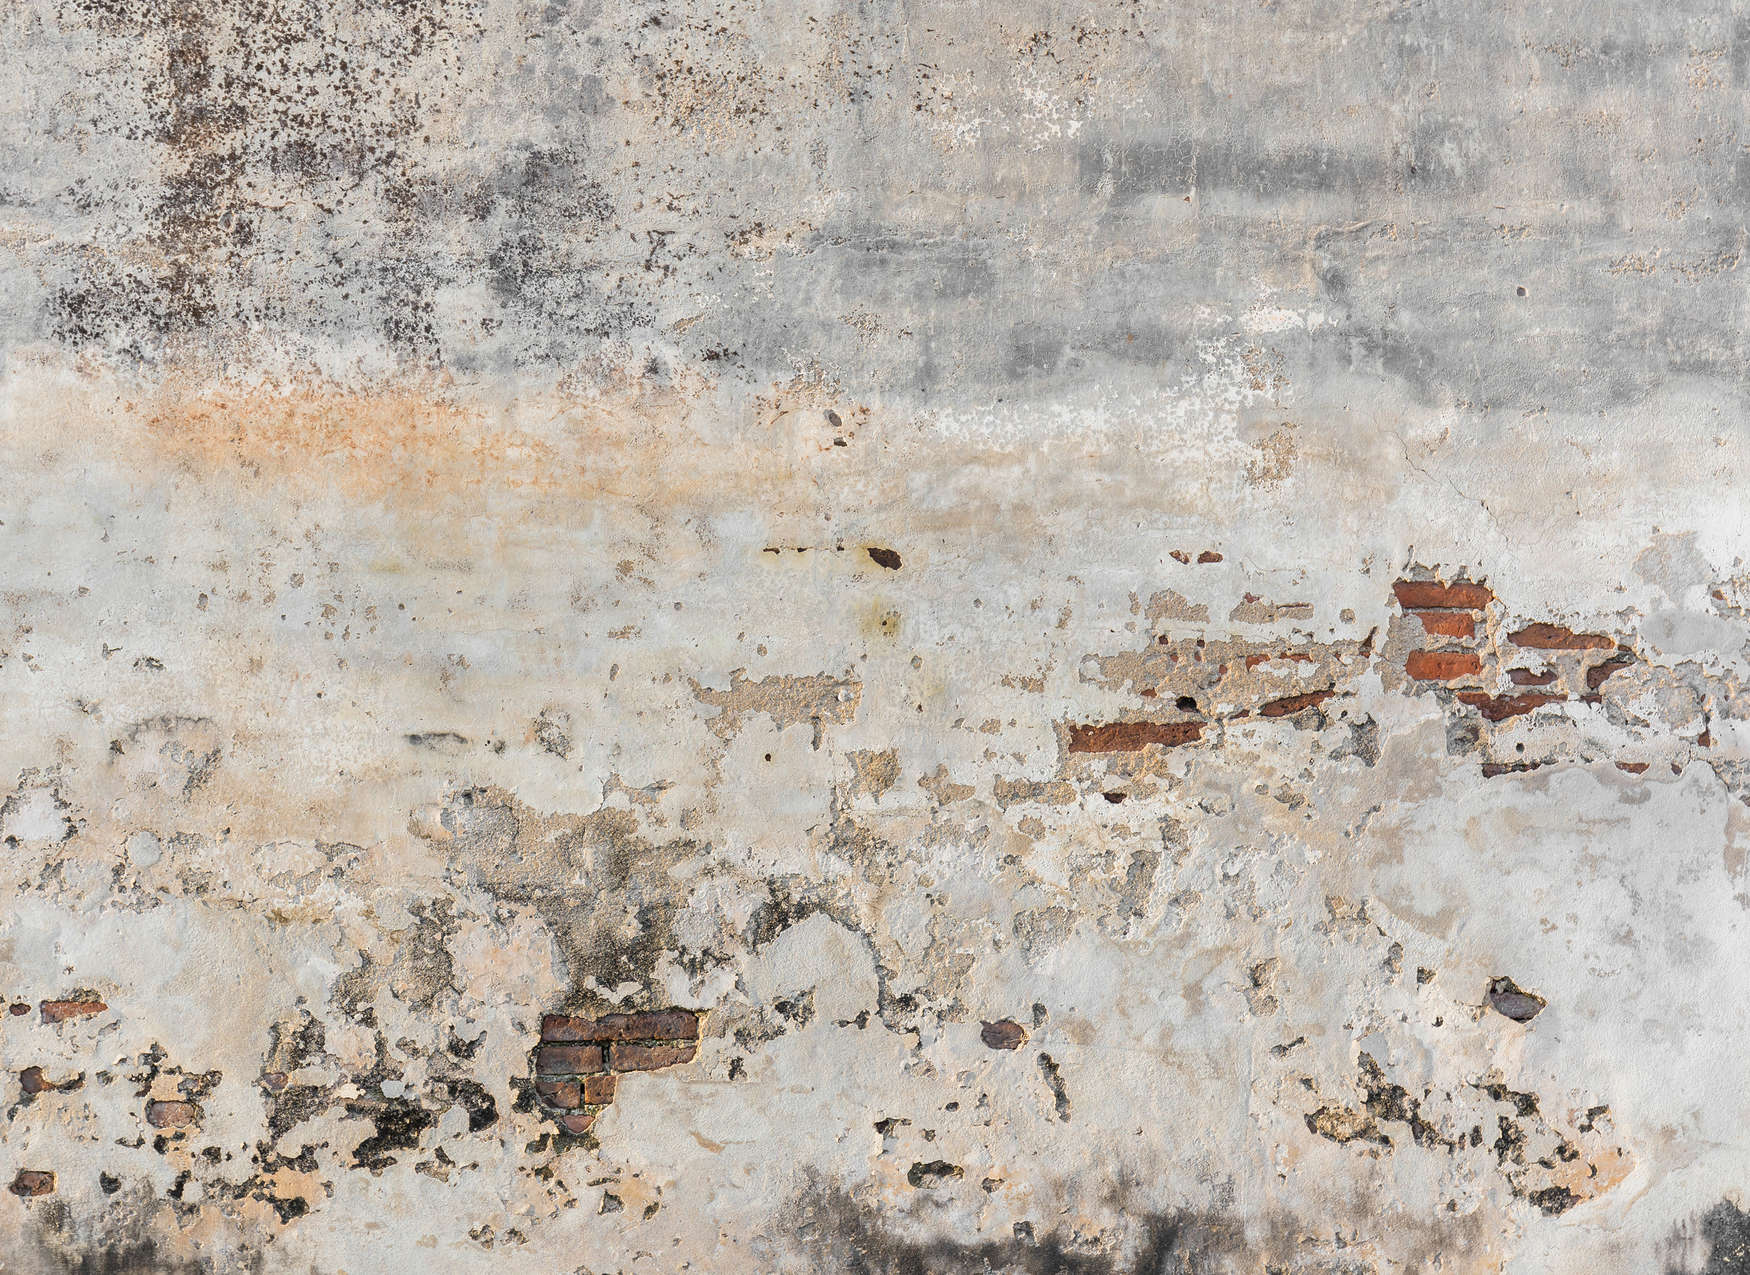             Photo wallpaper old & plastered brick wall - grey, brown
        